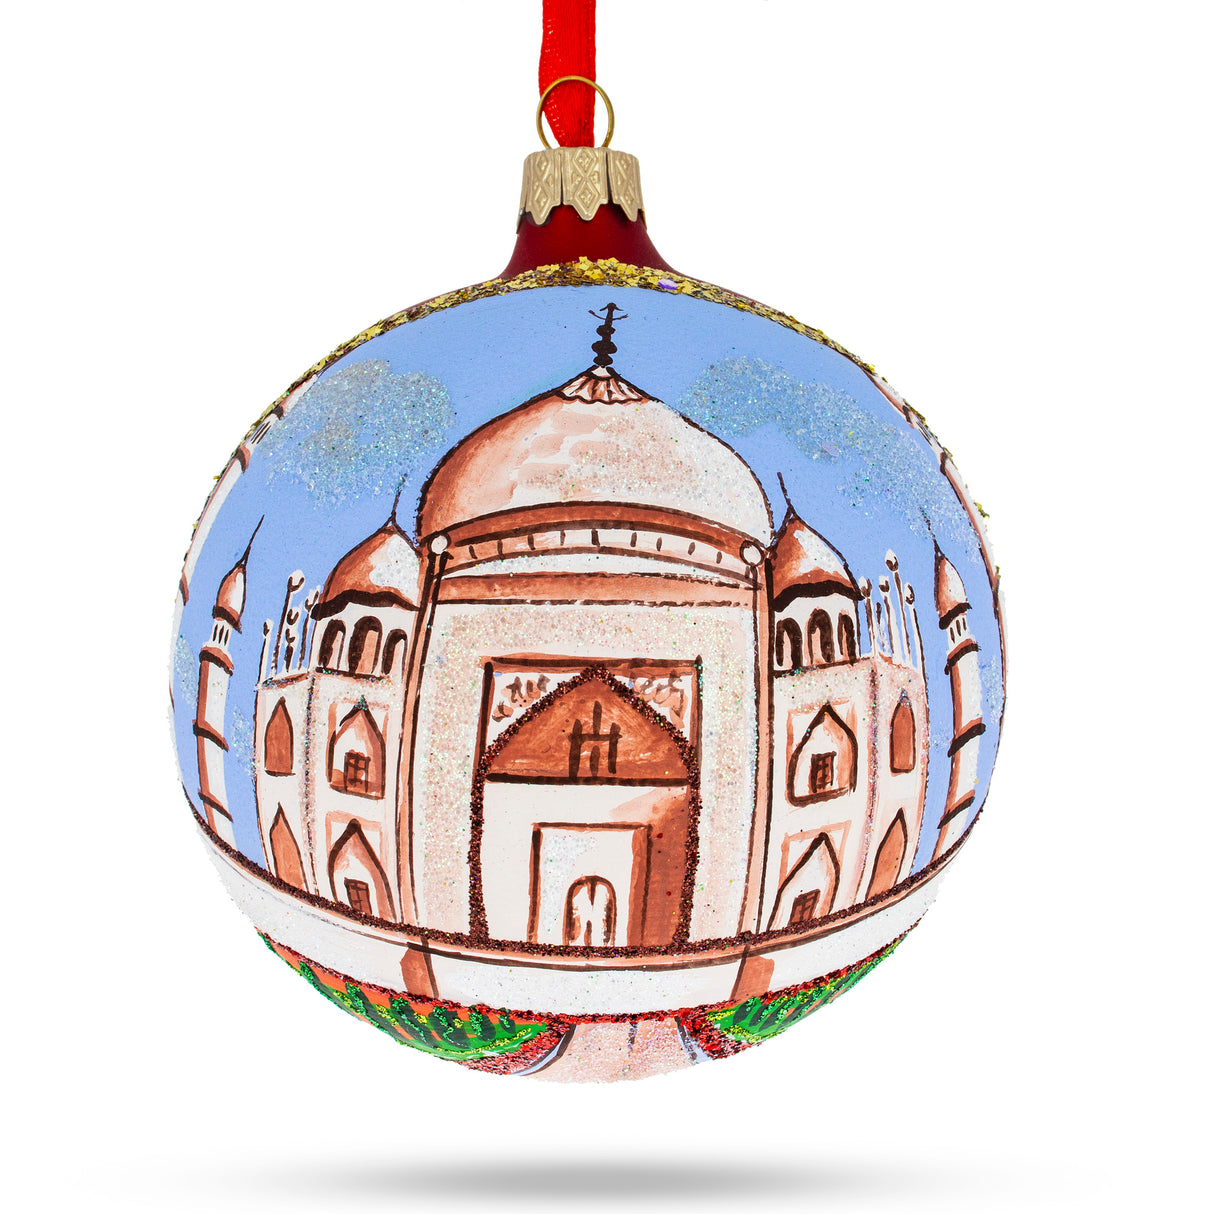 Taj Mahal, India Glass Ball Christmas Ornament 4 Inches in Multi color, Round shape